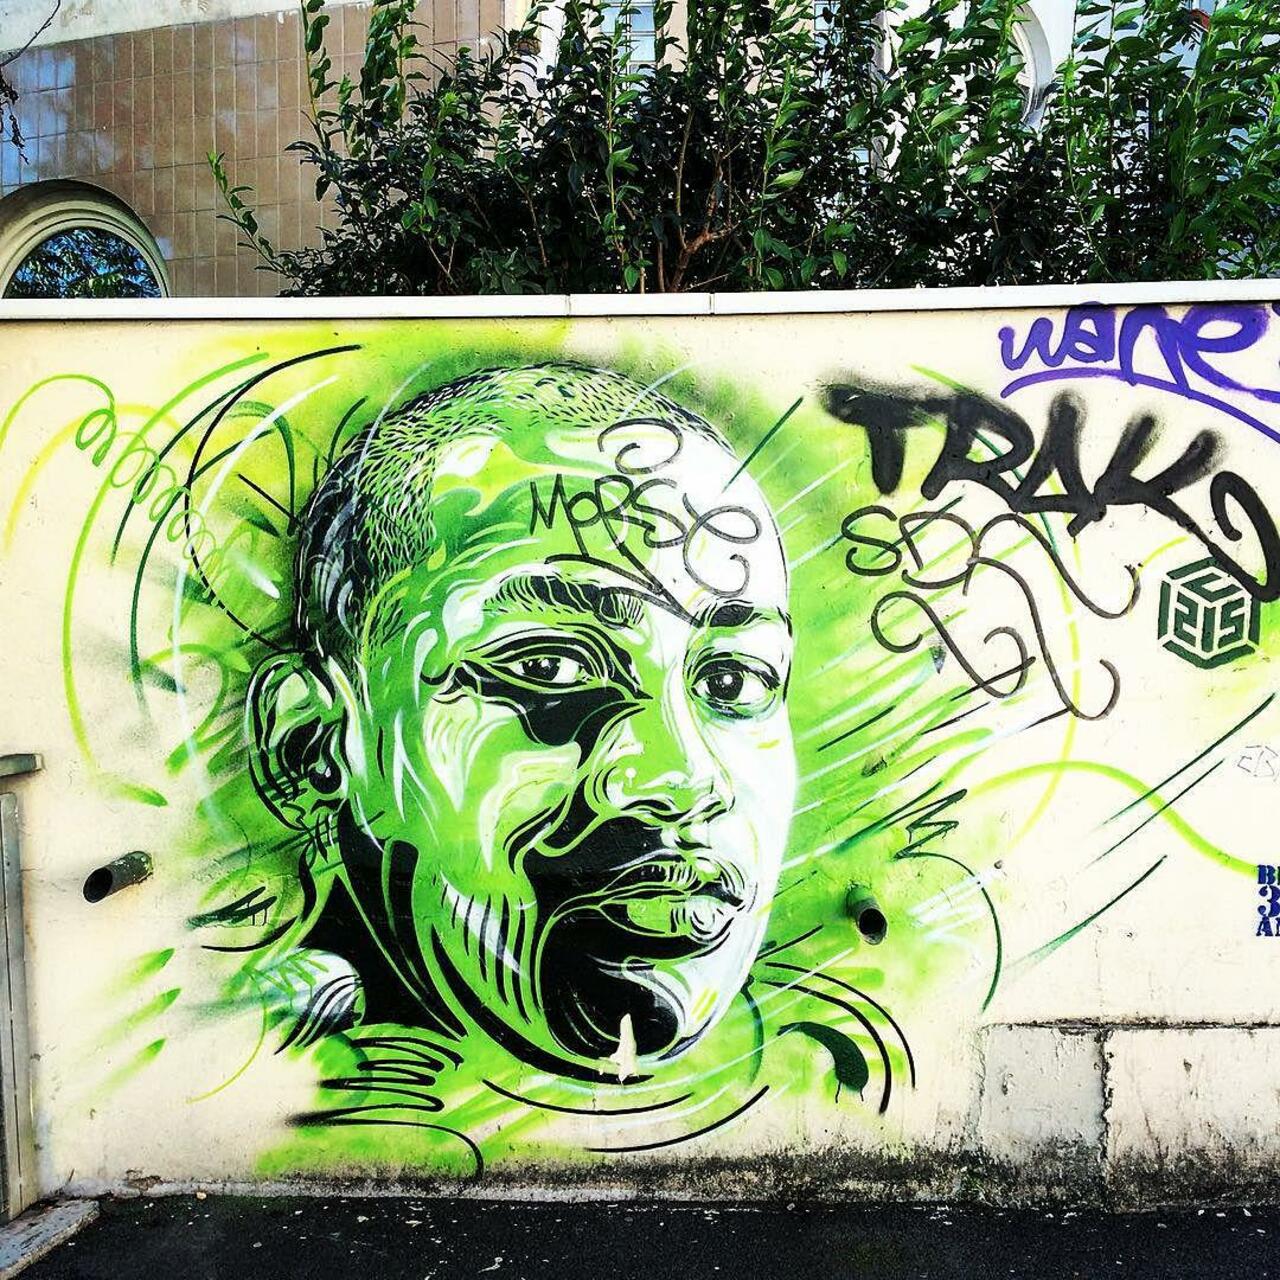 circumjacent_fr: #Paris #graffiti photo by julosteart http://ift.tt/1JA6CIl #StreetArt http://t.co/7wzPSqQGmr